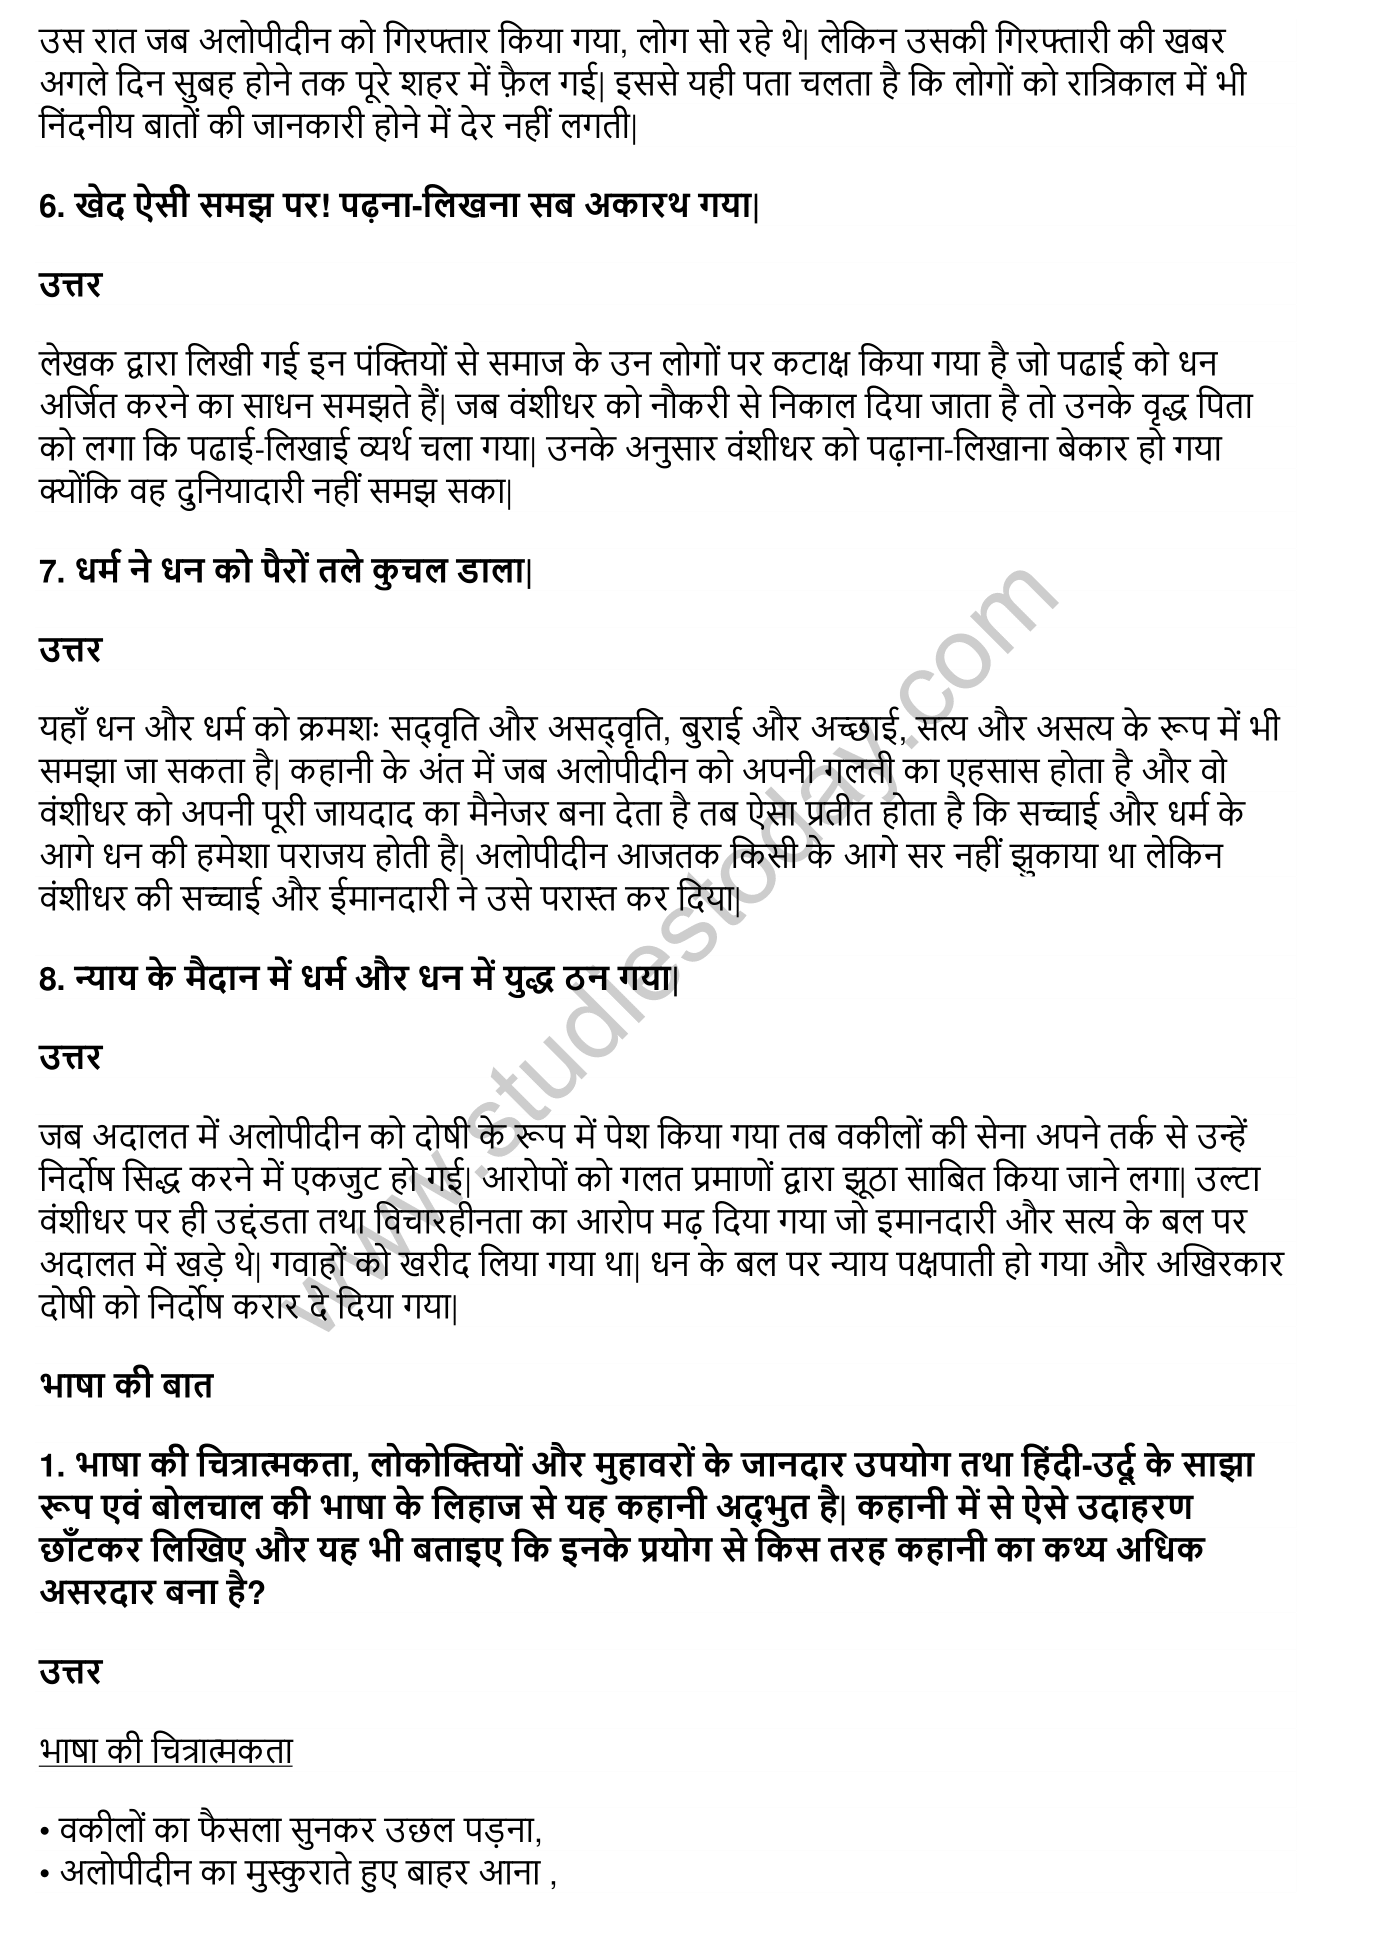 NCERT-Solutions-Class-11-Hindi-Aroh-Prem-Chand-6